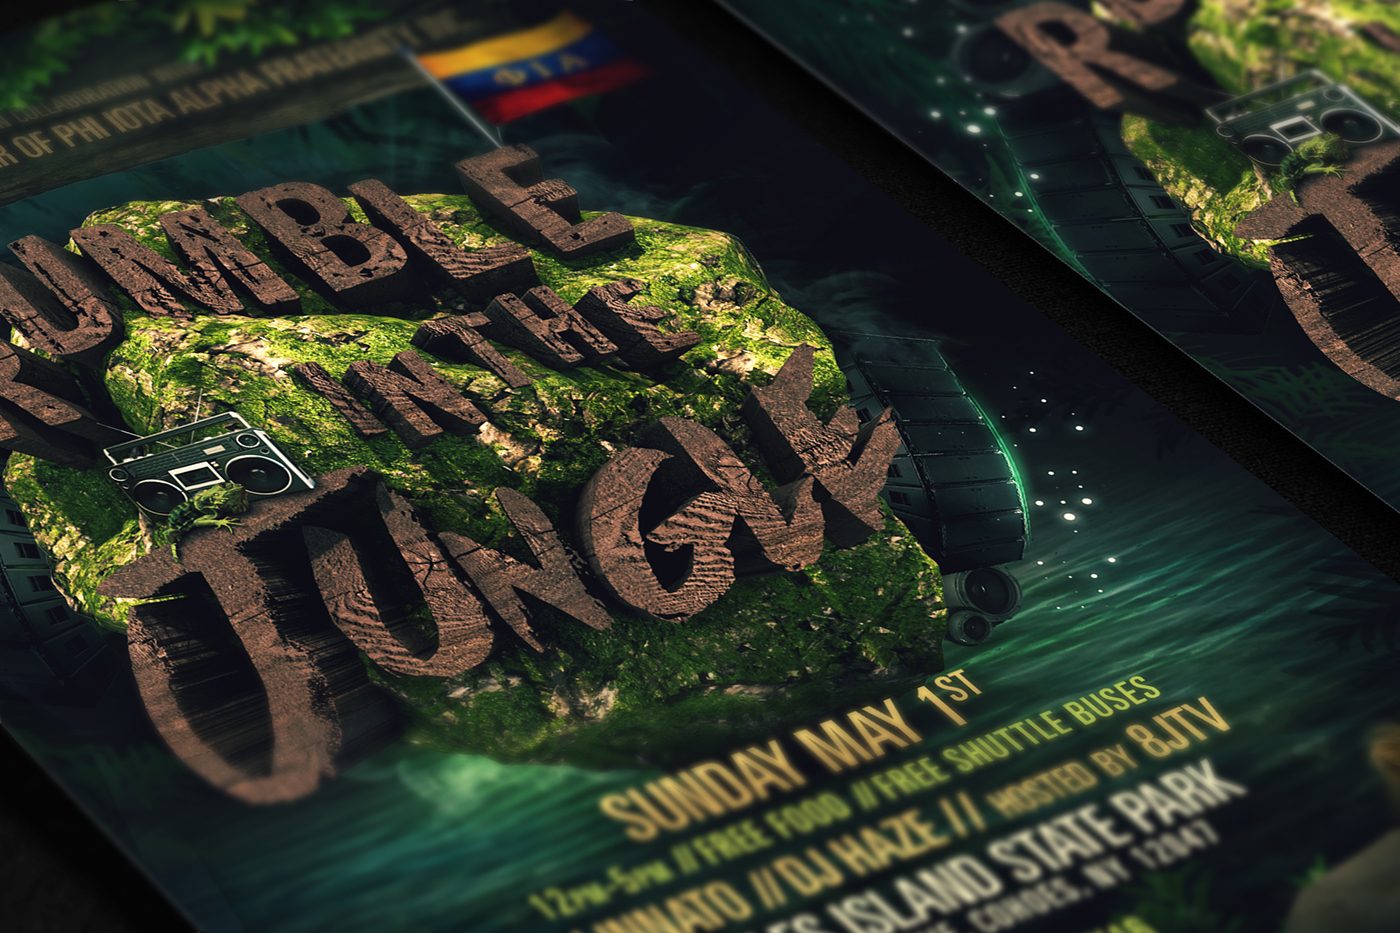 jungle fuerza latina latino Albany University College Event social cinema4d festival Nature 3D typography